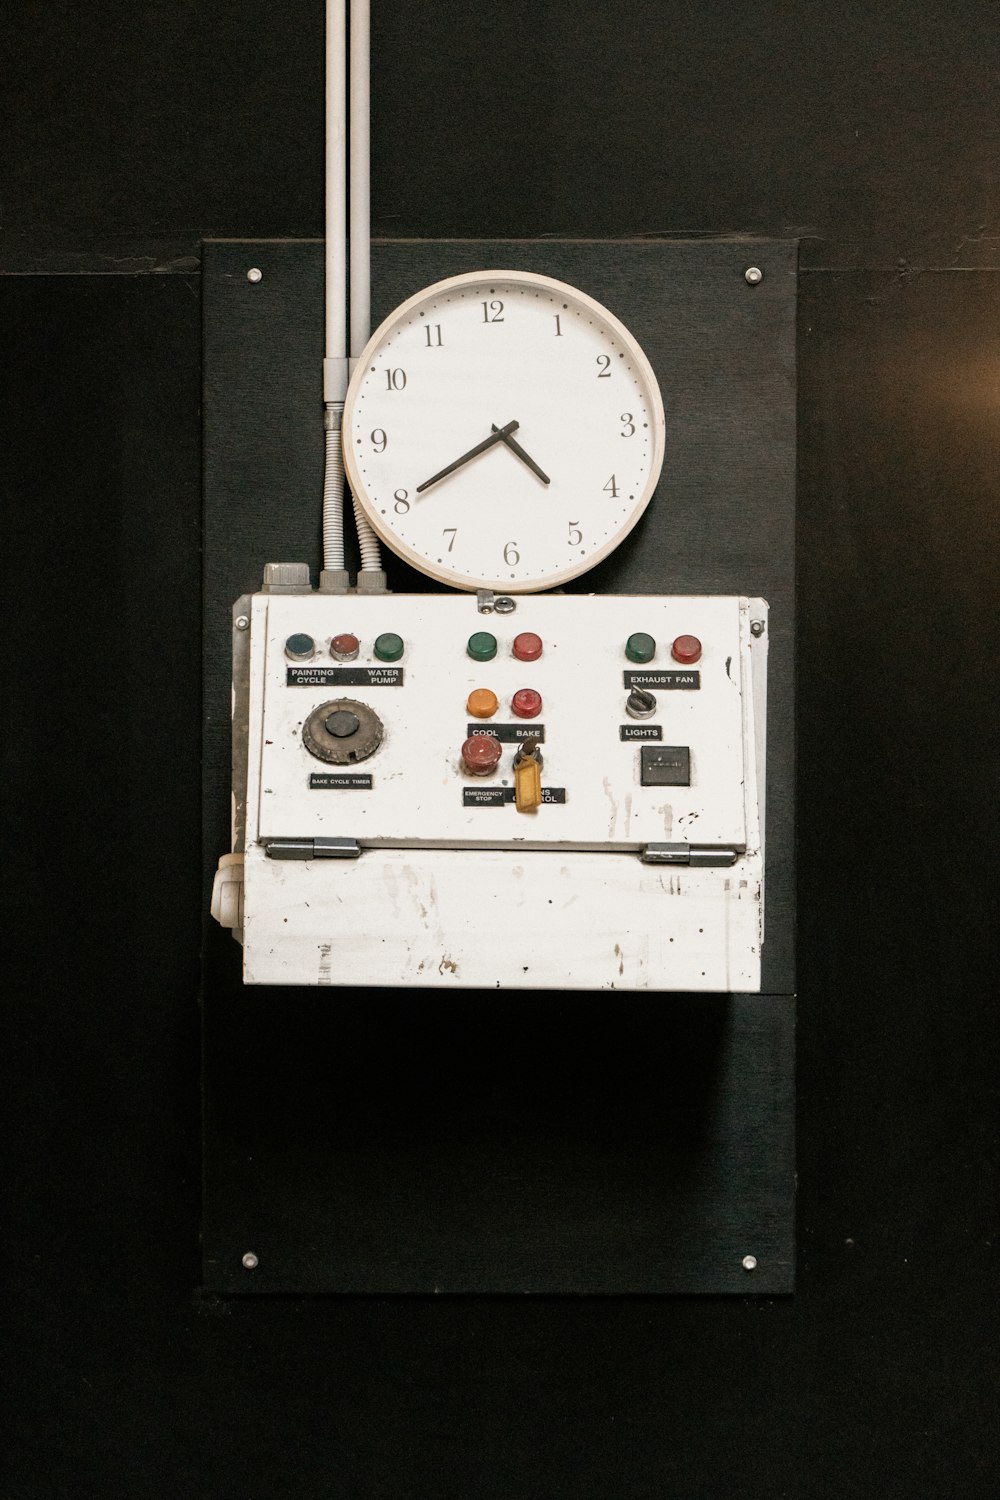 white and black analog gauge